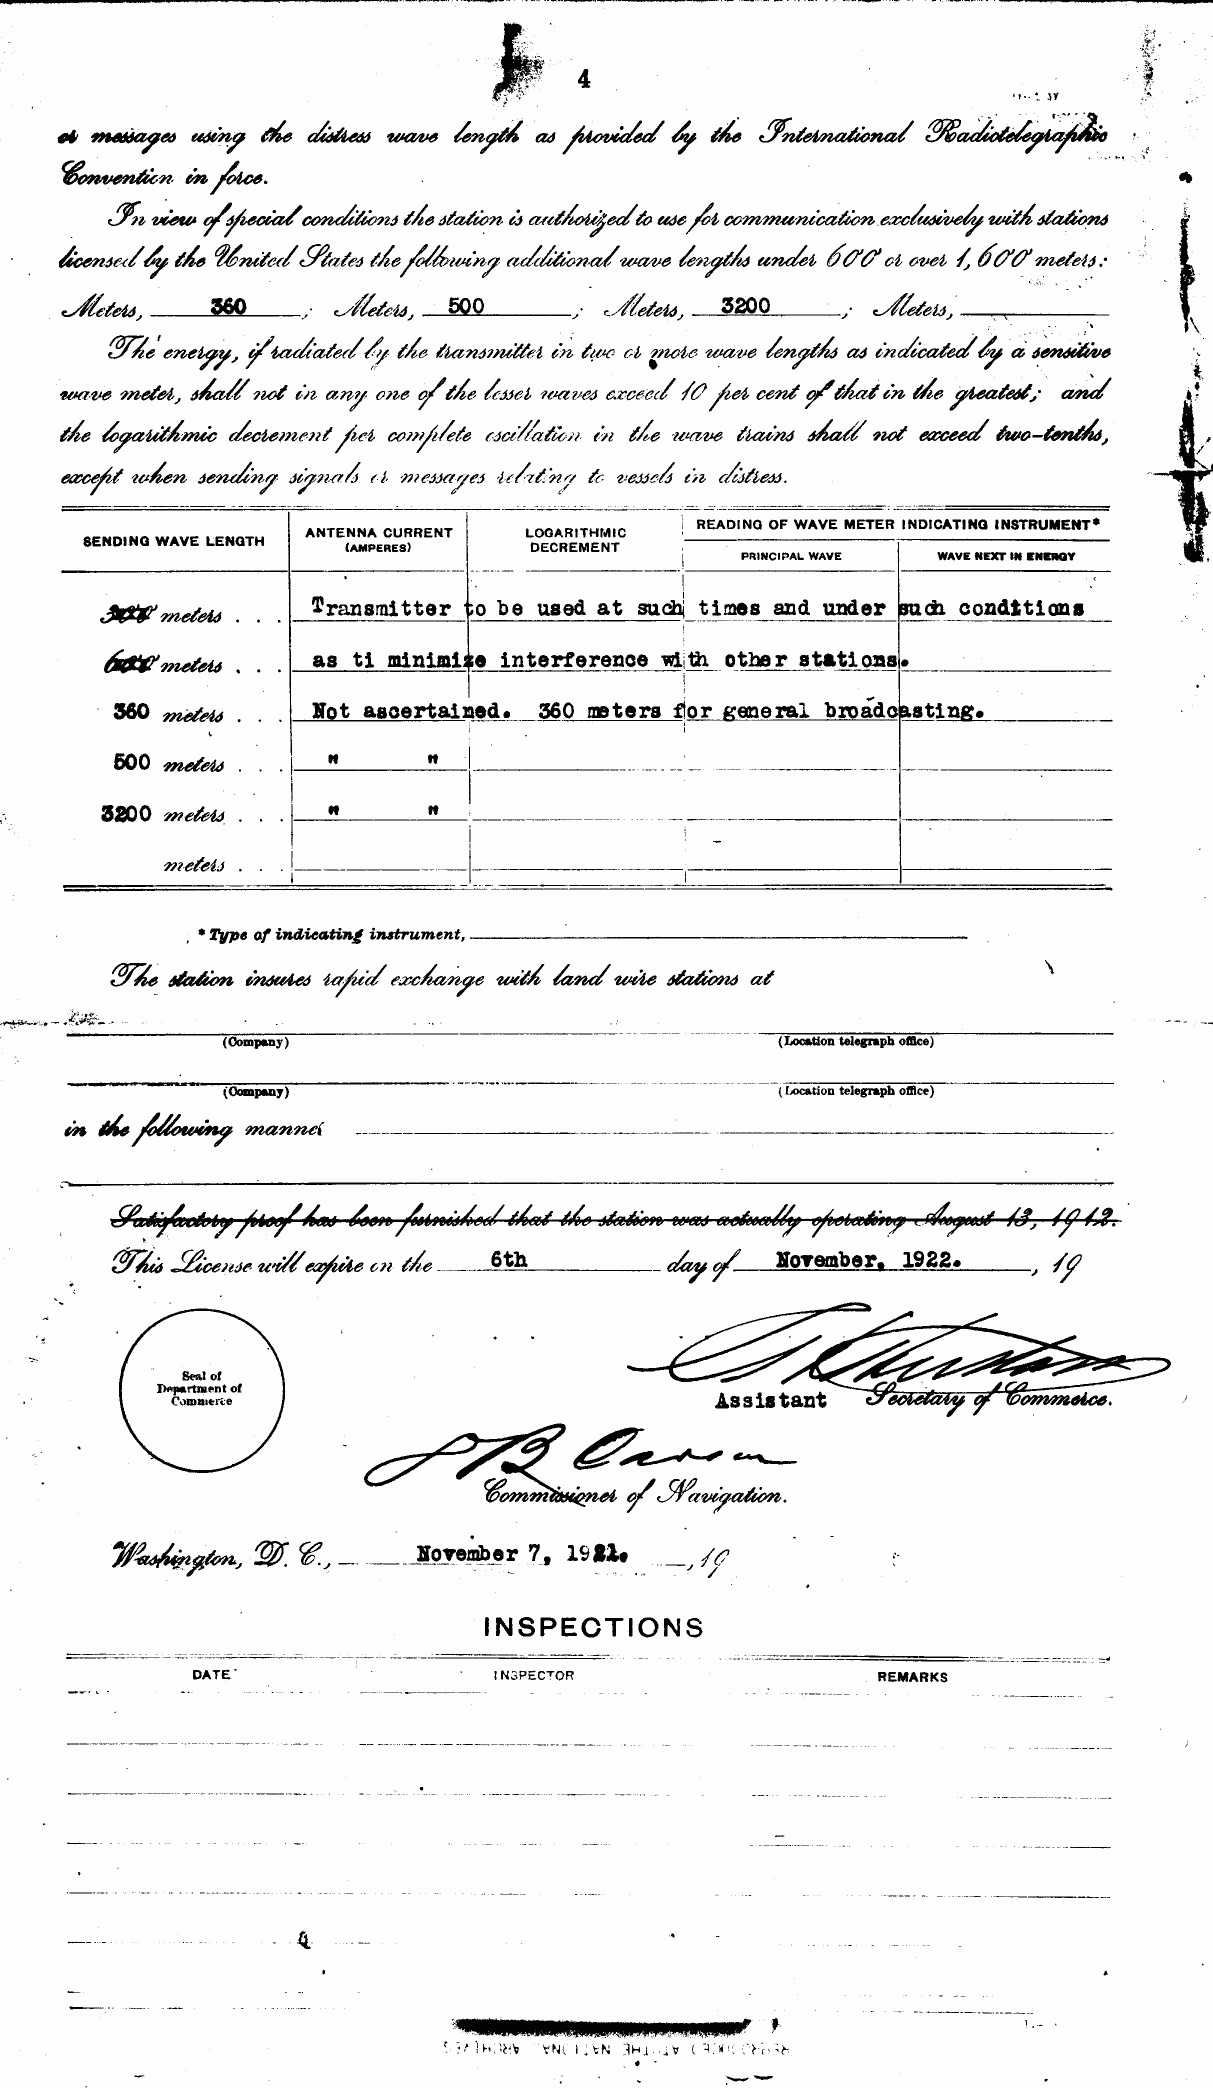 KDKA second licence (November 7, 1921) - 4th page